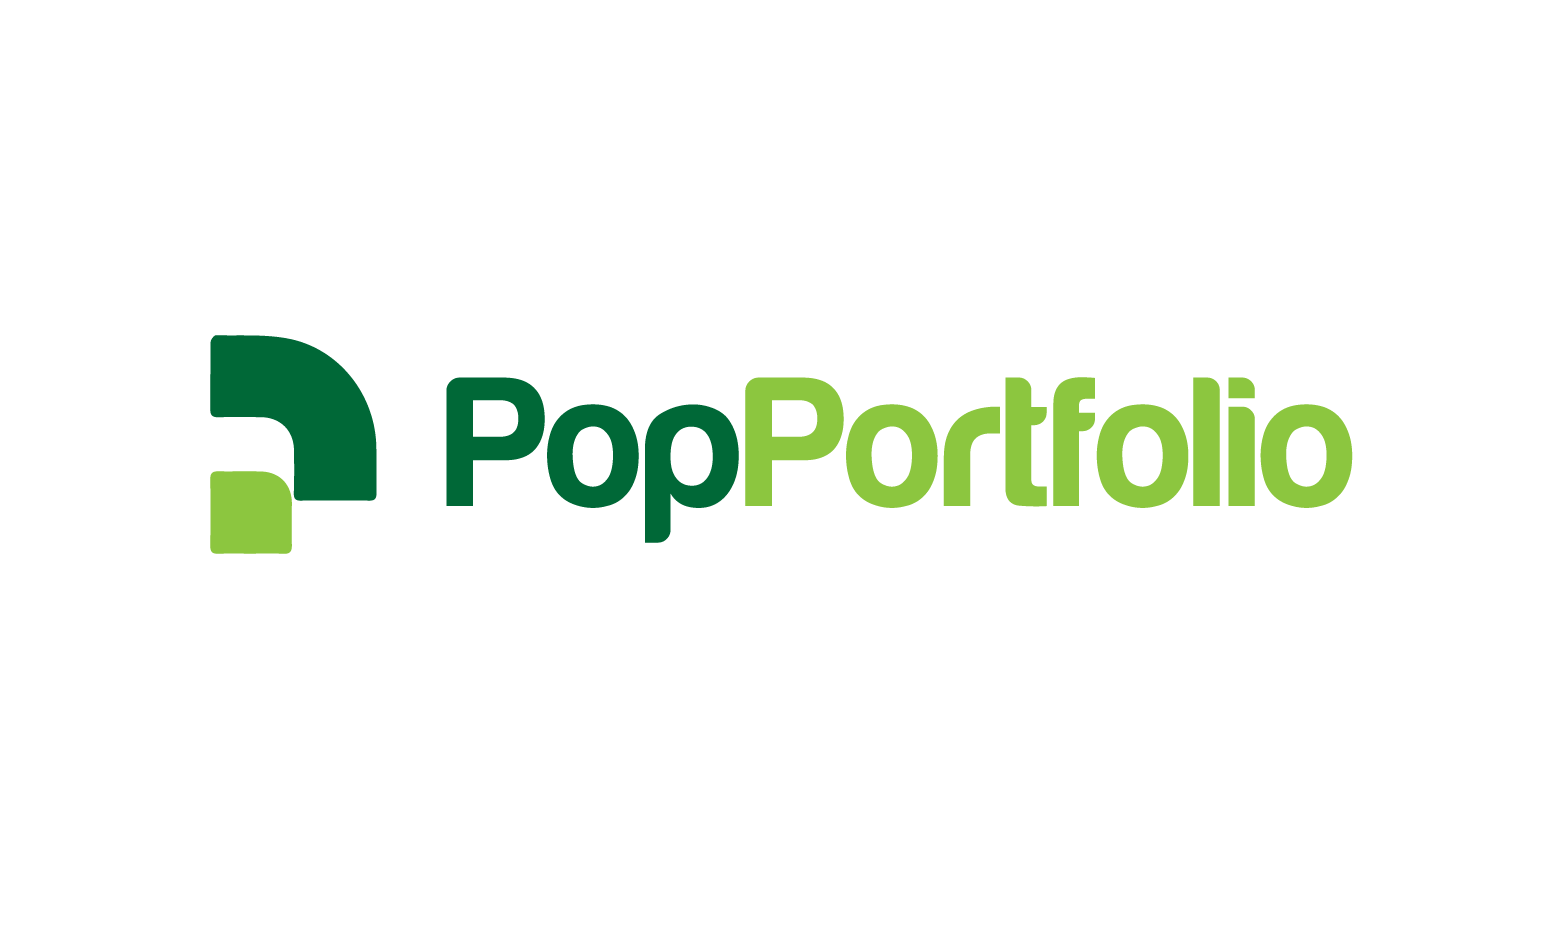 PopPortfolio.com - Creative brandable domain for sale